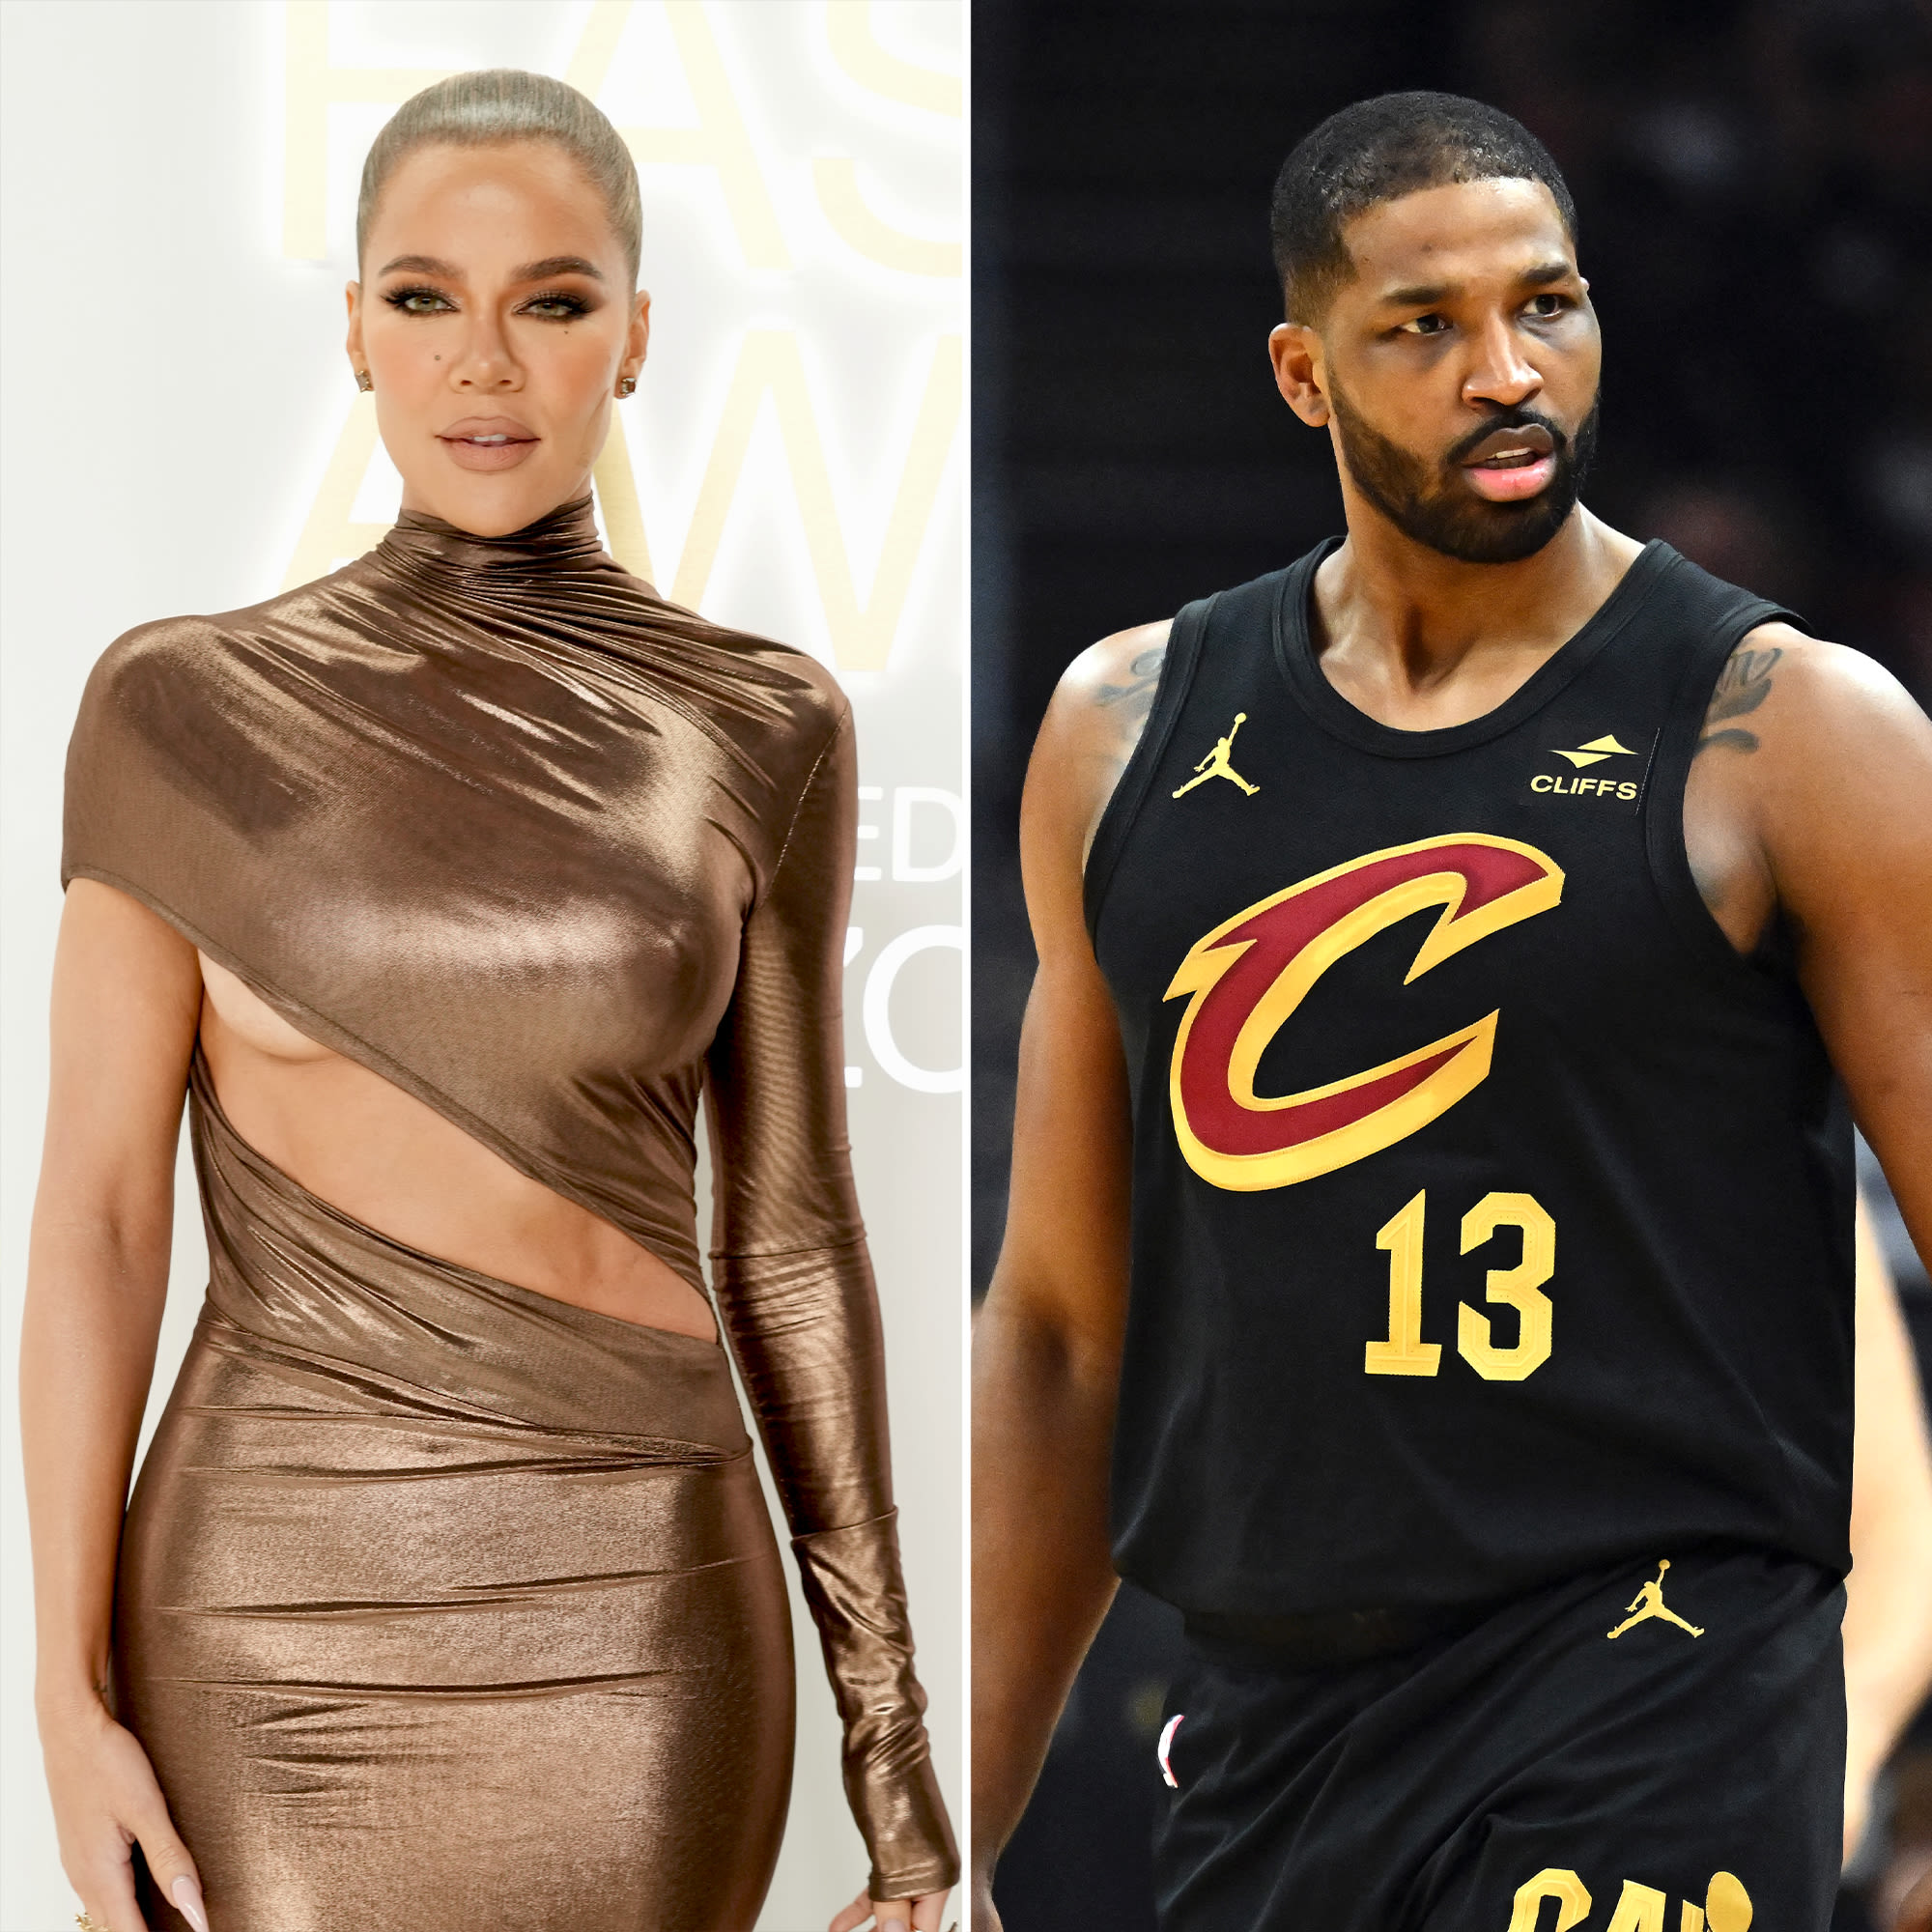 Khloe Kardashian Brings Her Kids to Tristan Thompson’s NBA Game